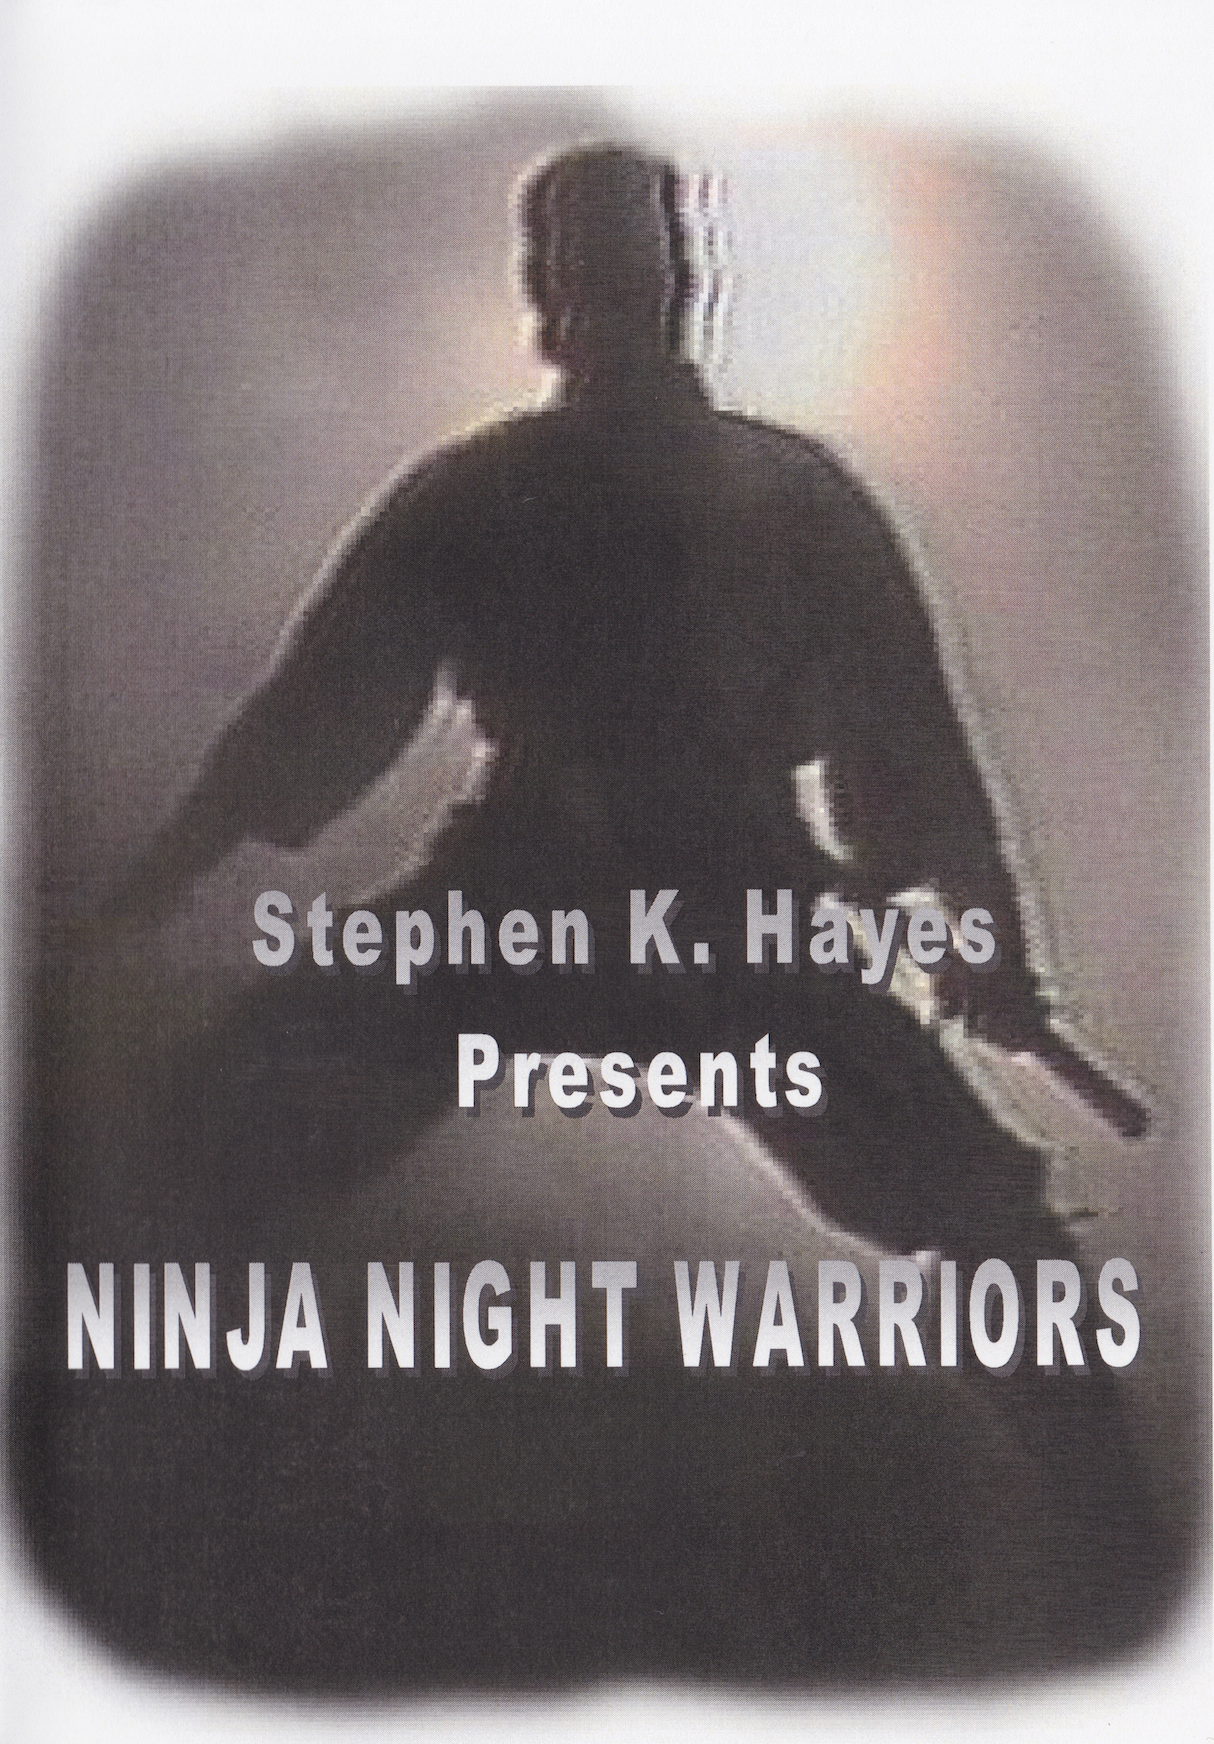 Ninja Night Warriors 2 DVD Set with Stephen Hayes